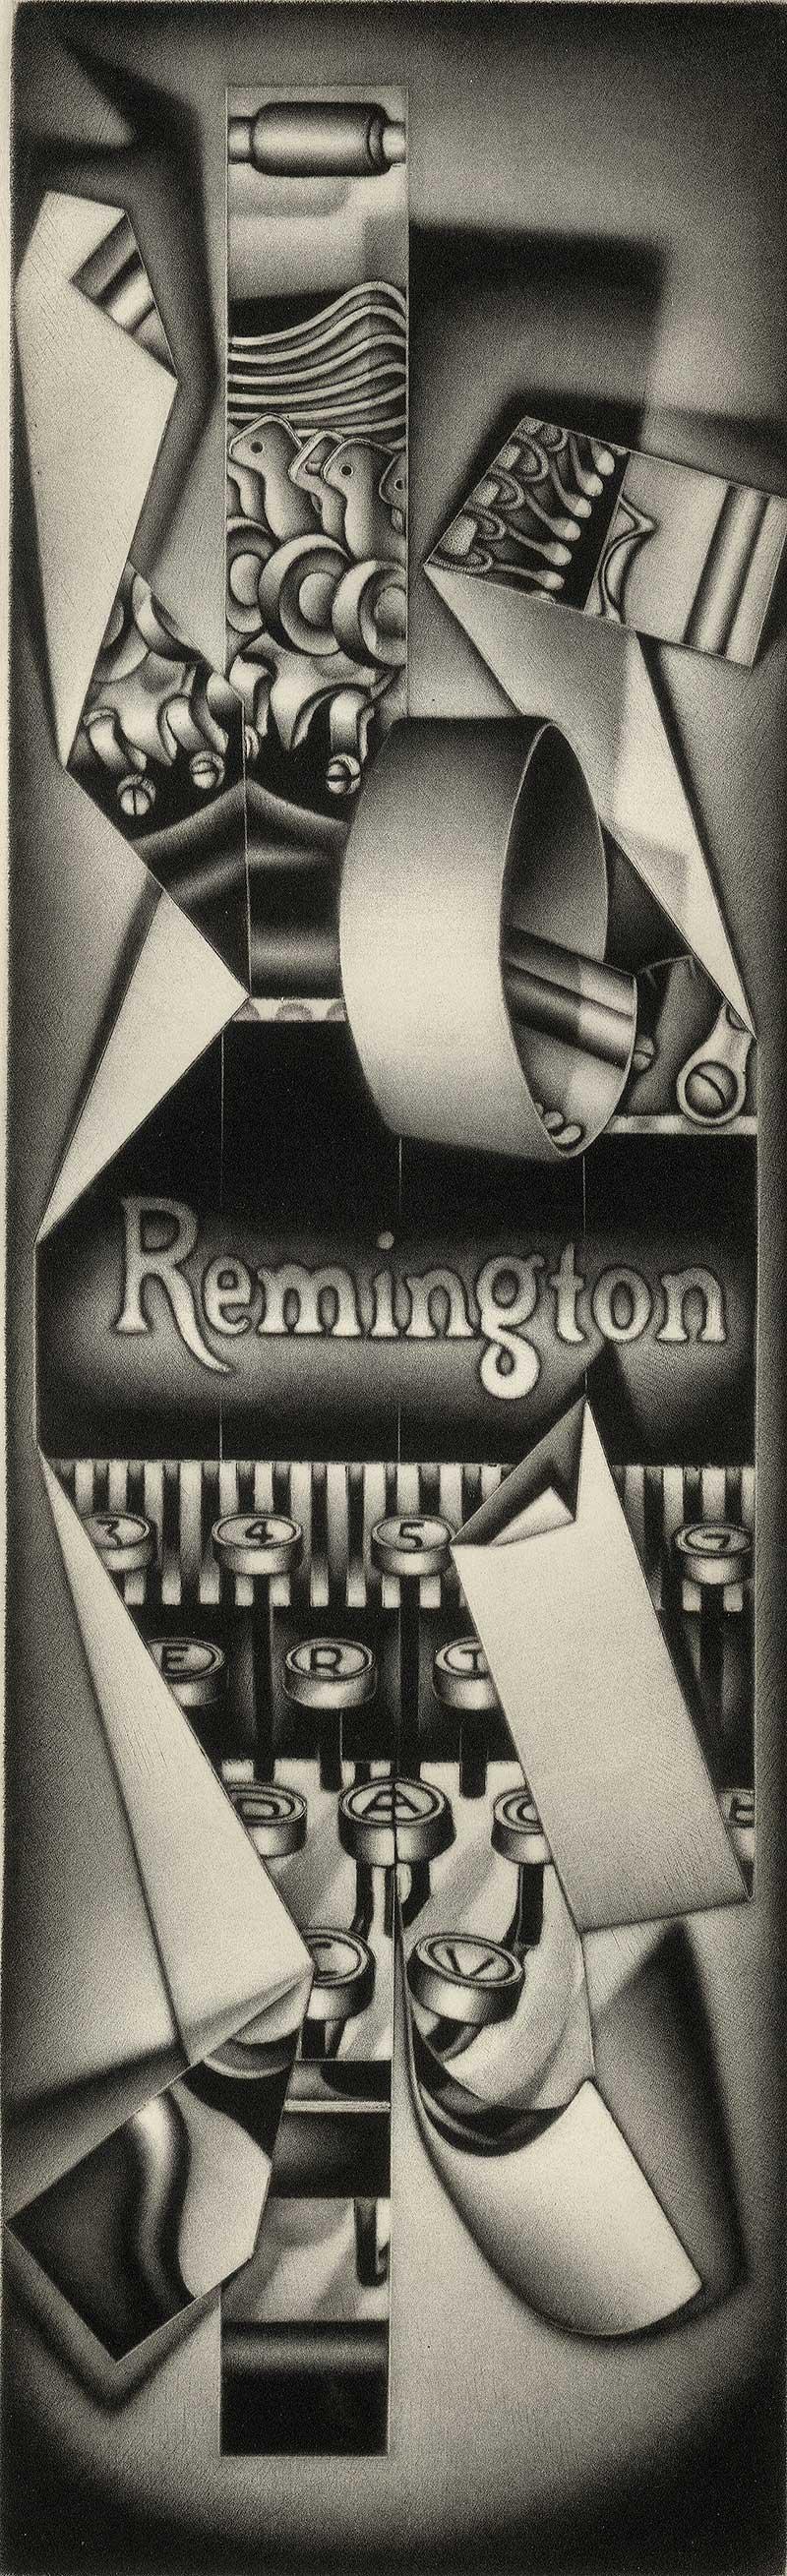 Carol Wax Abstract Print - Remington Strip Tease